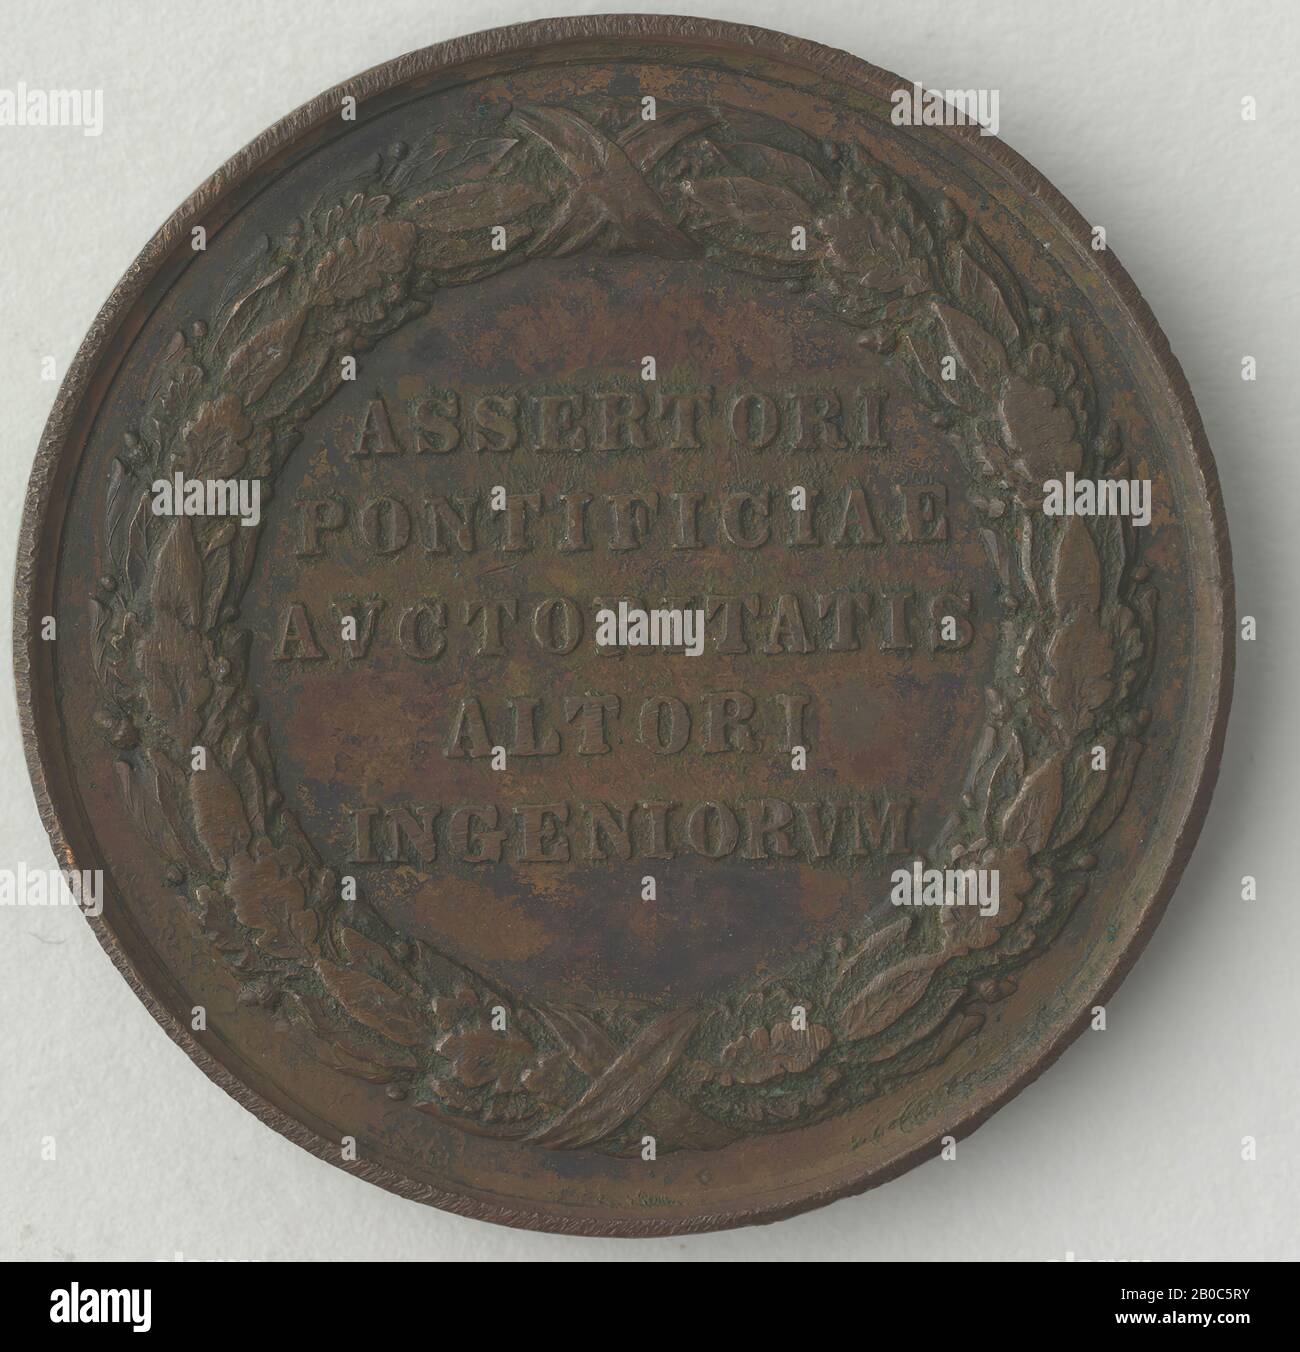 Artista sconosciuto, medaglia Julius II, 1800-1900, bronzo, 1 5/8 in. (4,2 cm.) Foto Stock